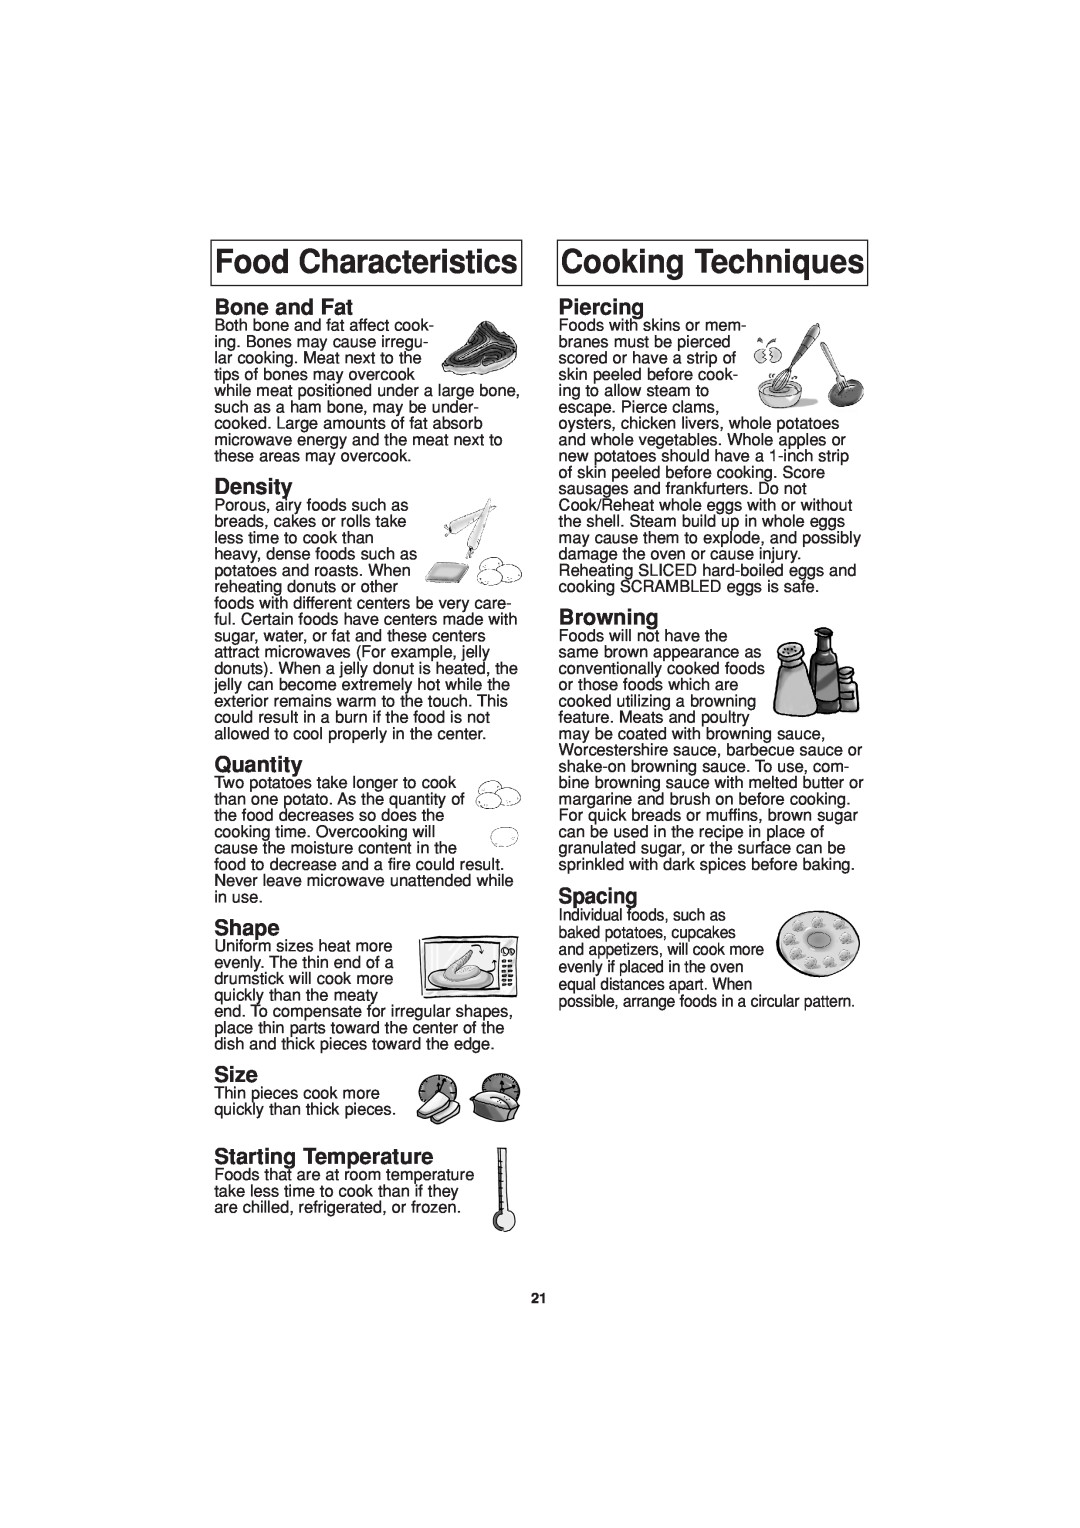 Panasonic NN-H504 Food Characteristics, Cooking Techniques, Bone and Fat, Density, Quantity, Shape, Size, Piercing 